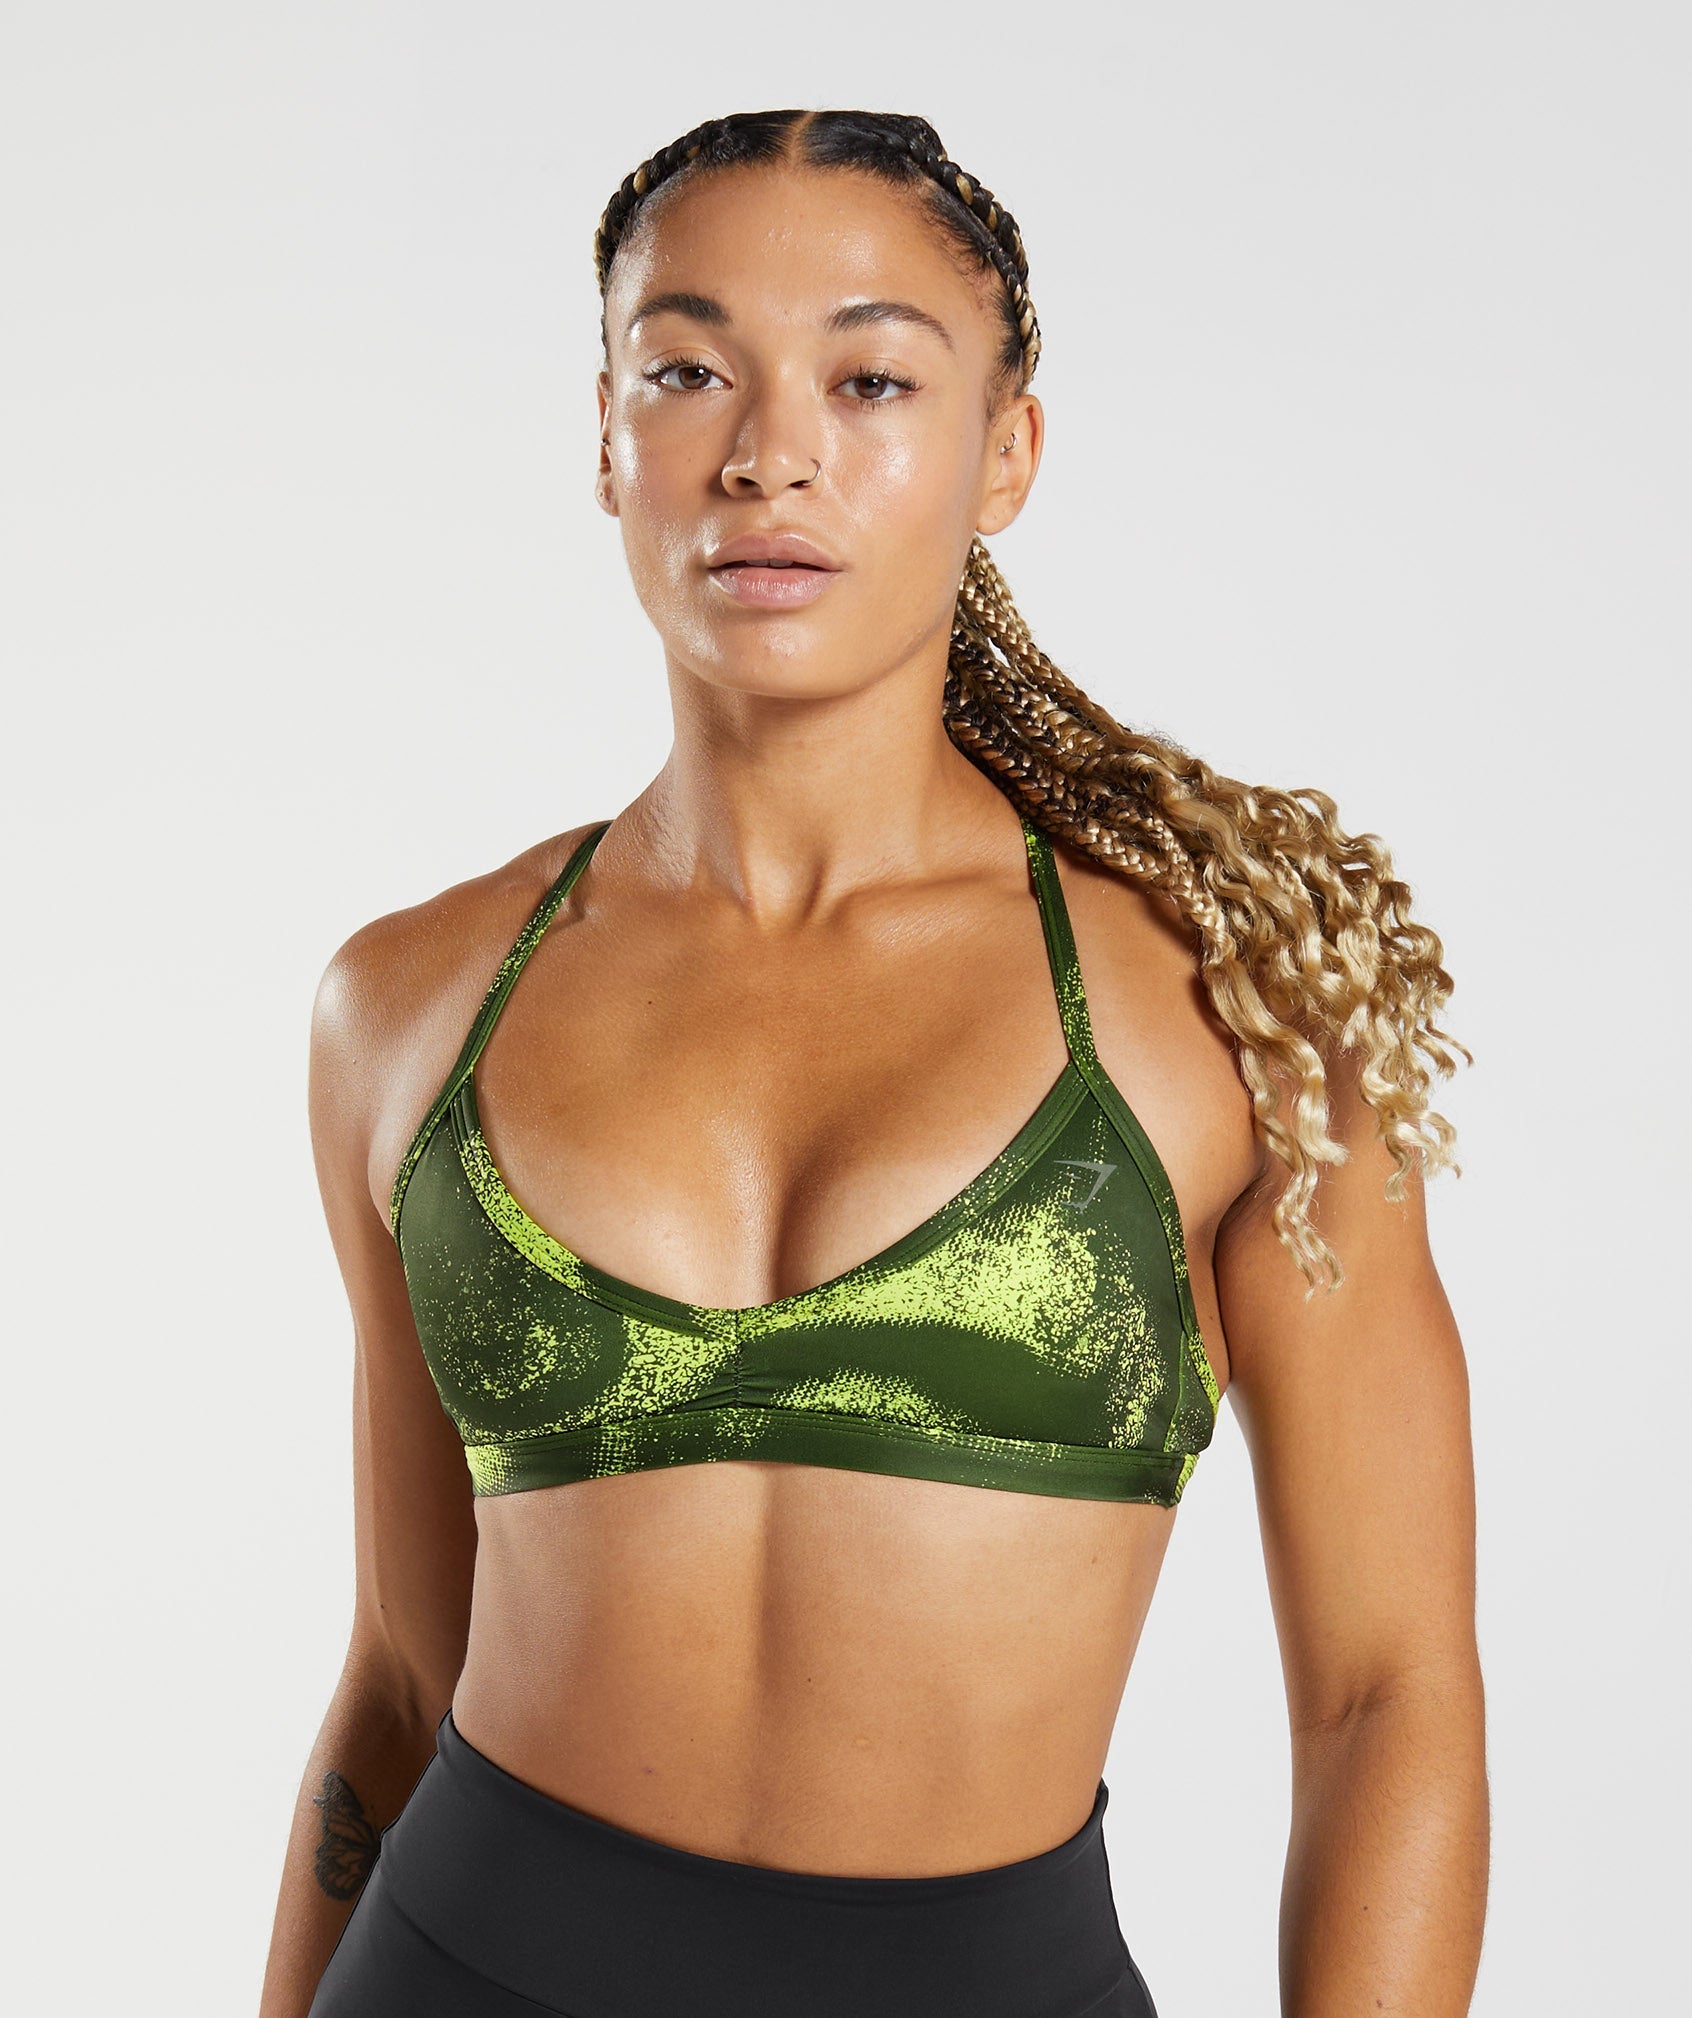 Mossimo Woman's Kelly Green Sports/Workout/Gym Bra Top - Size M